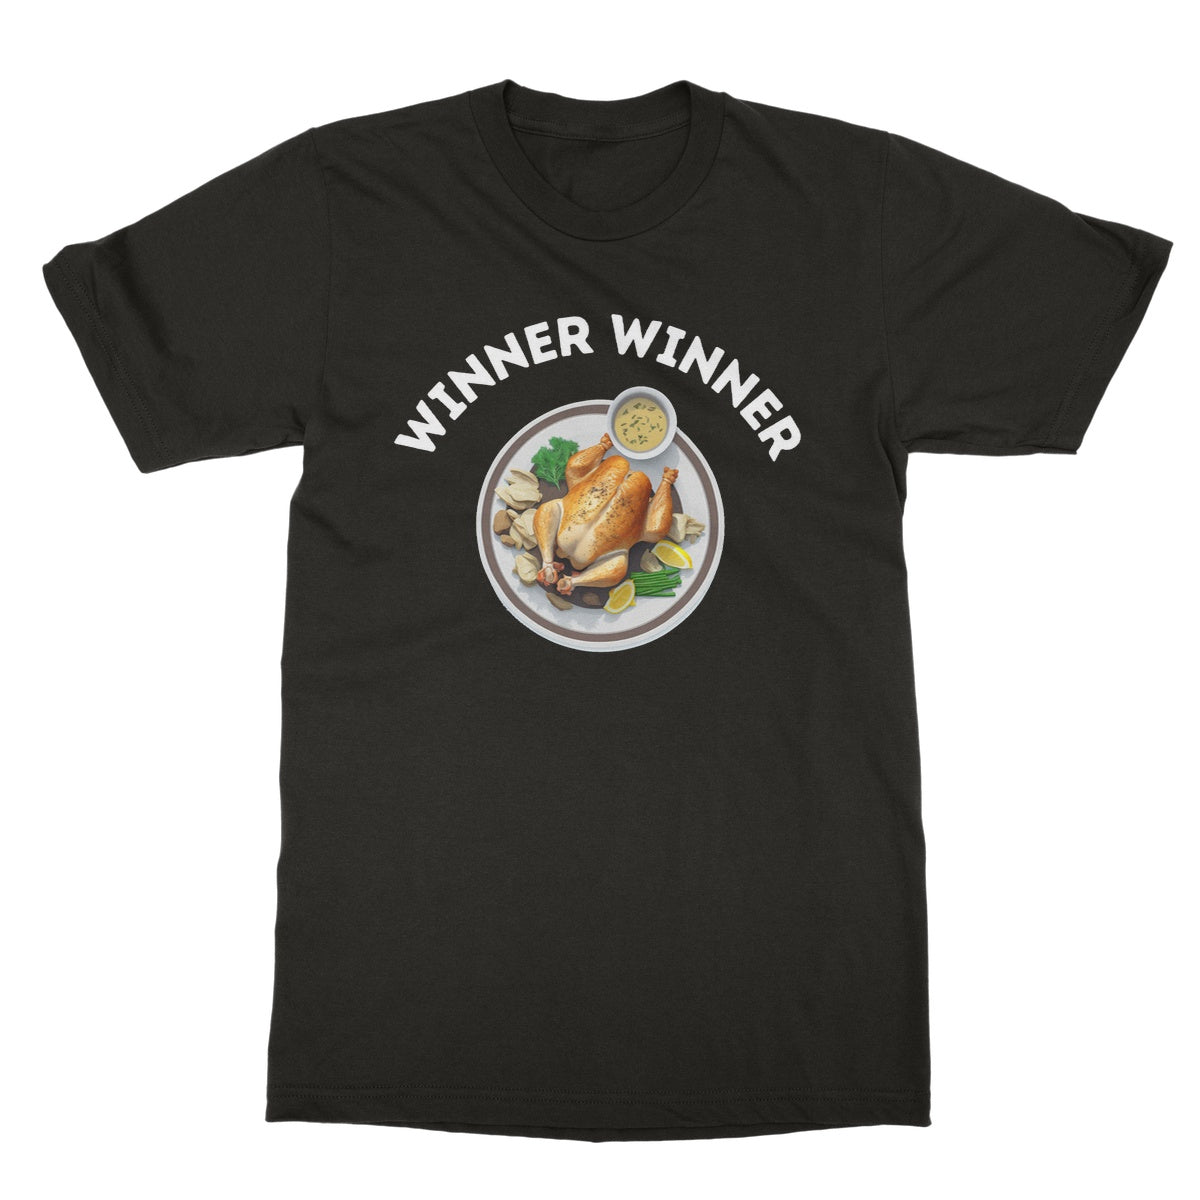 winner winner chicken dinner t shirt dark brown